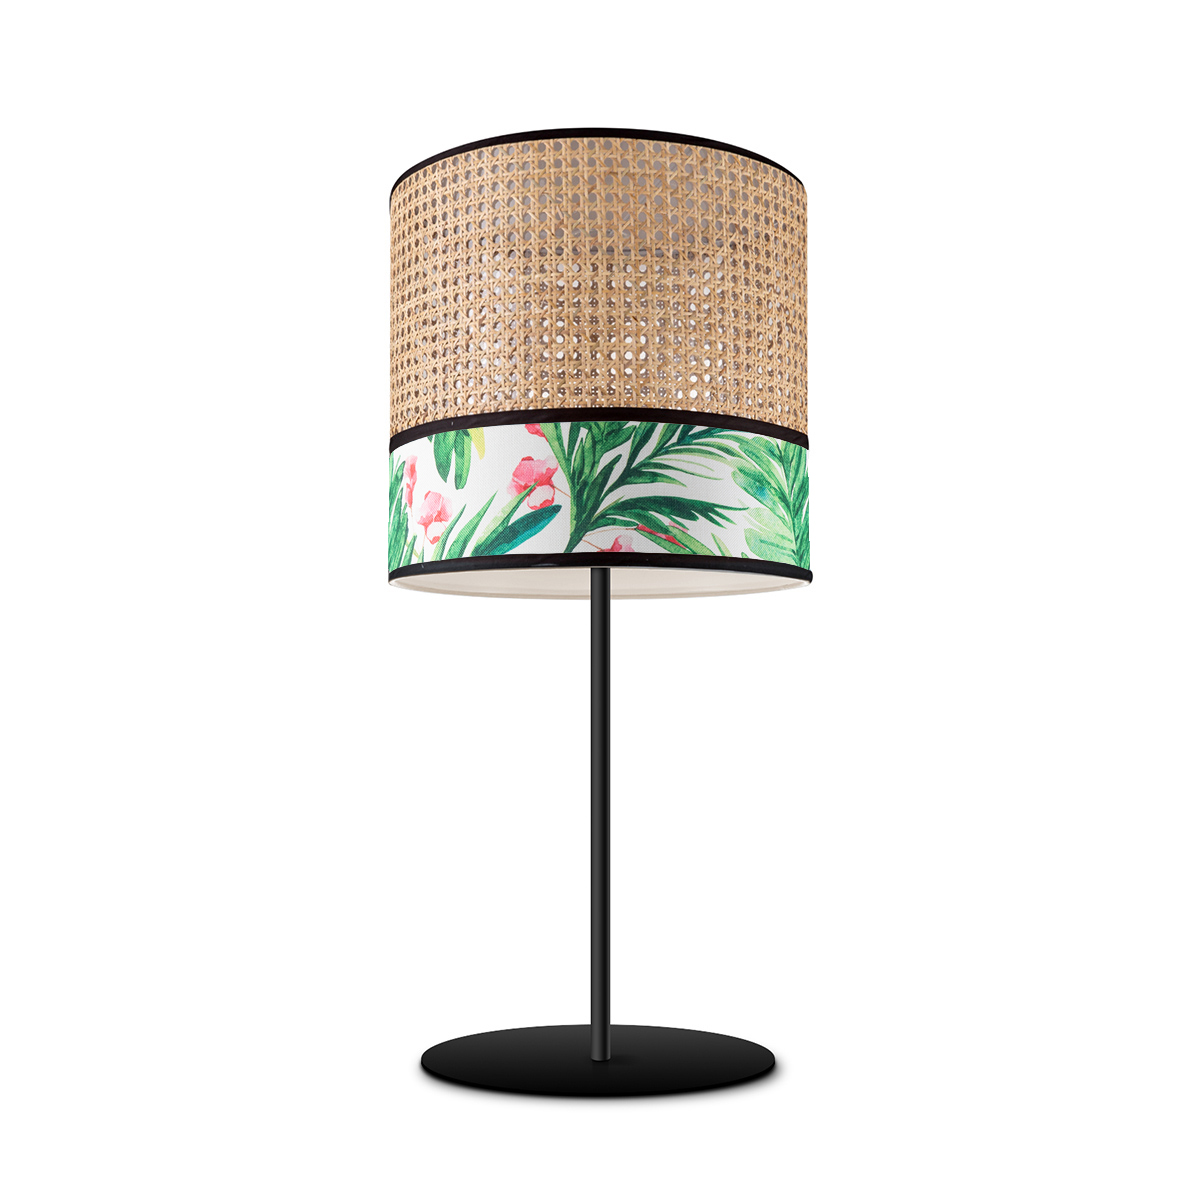 Tangla lighting - TLT7011-25B - Table lamp 1 Light - metal + rattan + TC fabric - spring - natural grass - E27